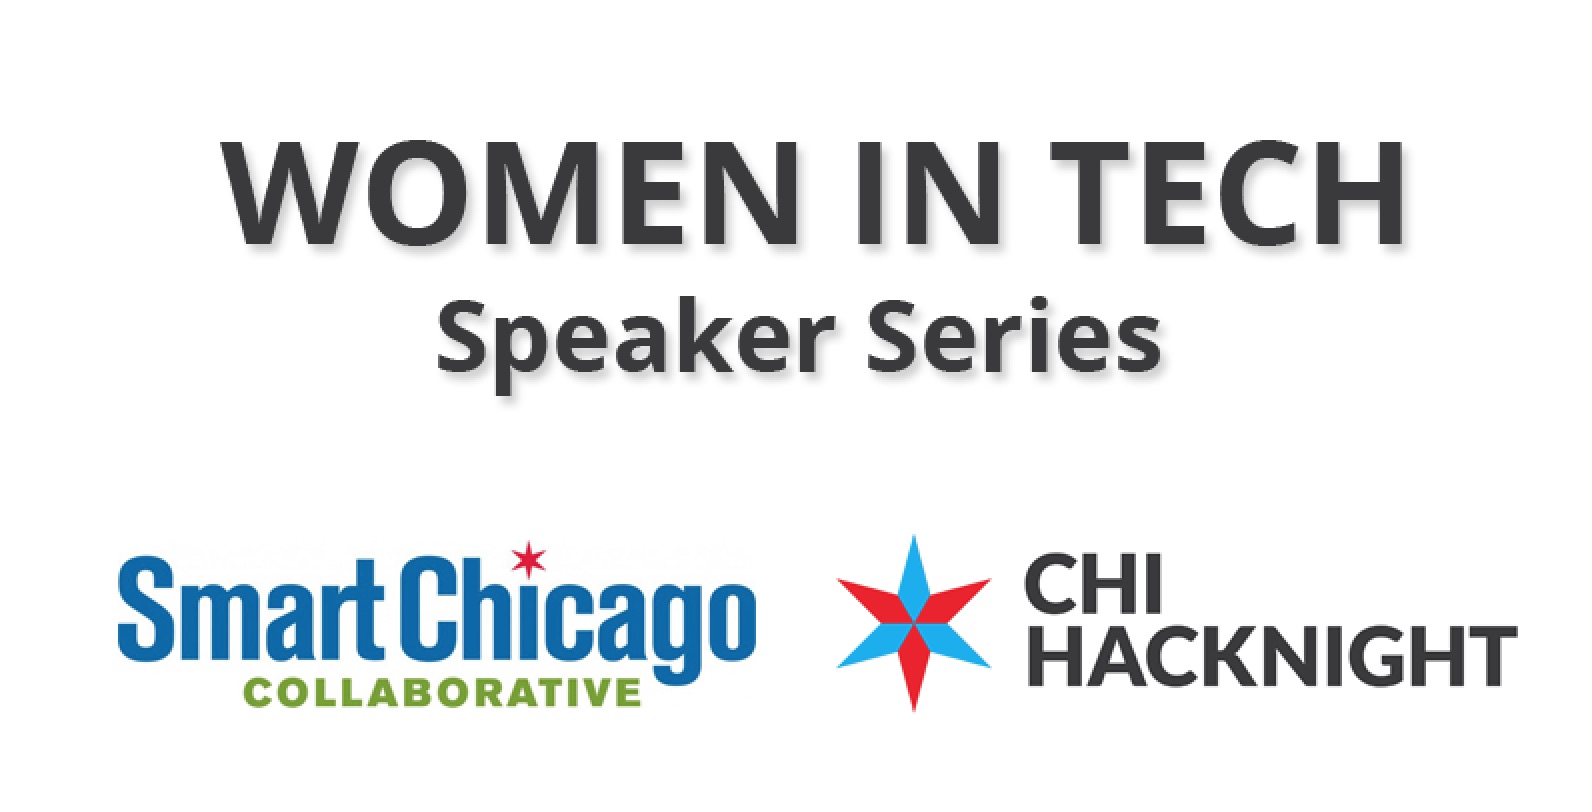 Presenting the Women In Tech Speaker Series